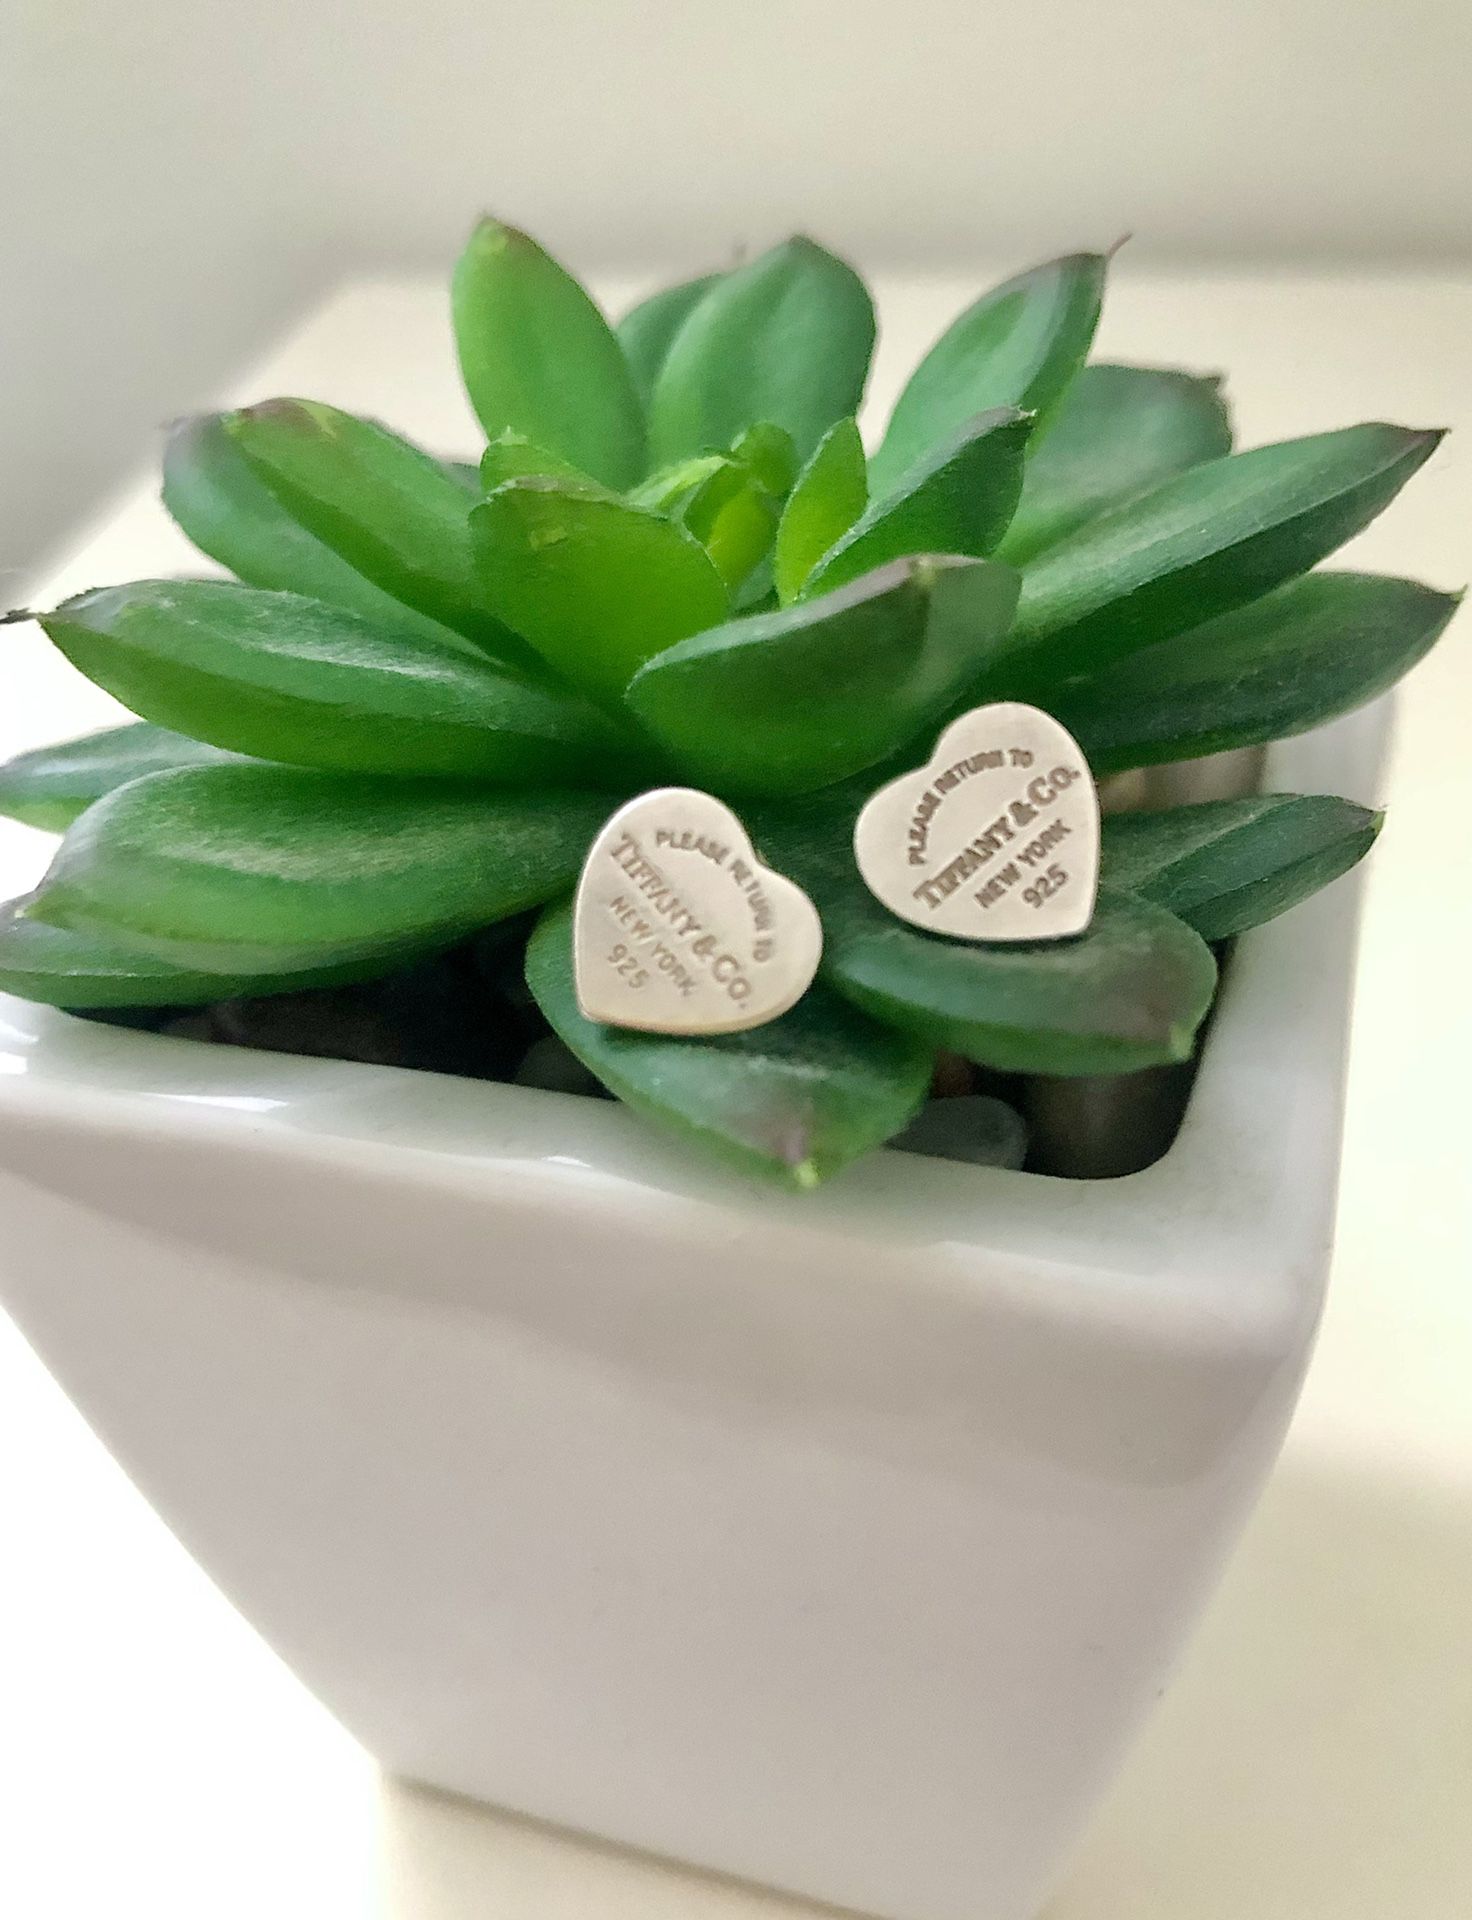 Tiffany & Co. Mini Heart Tag Earrings